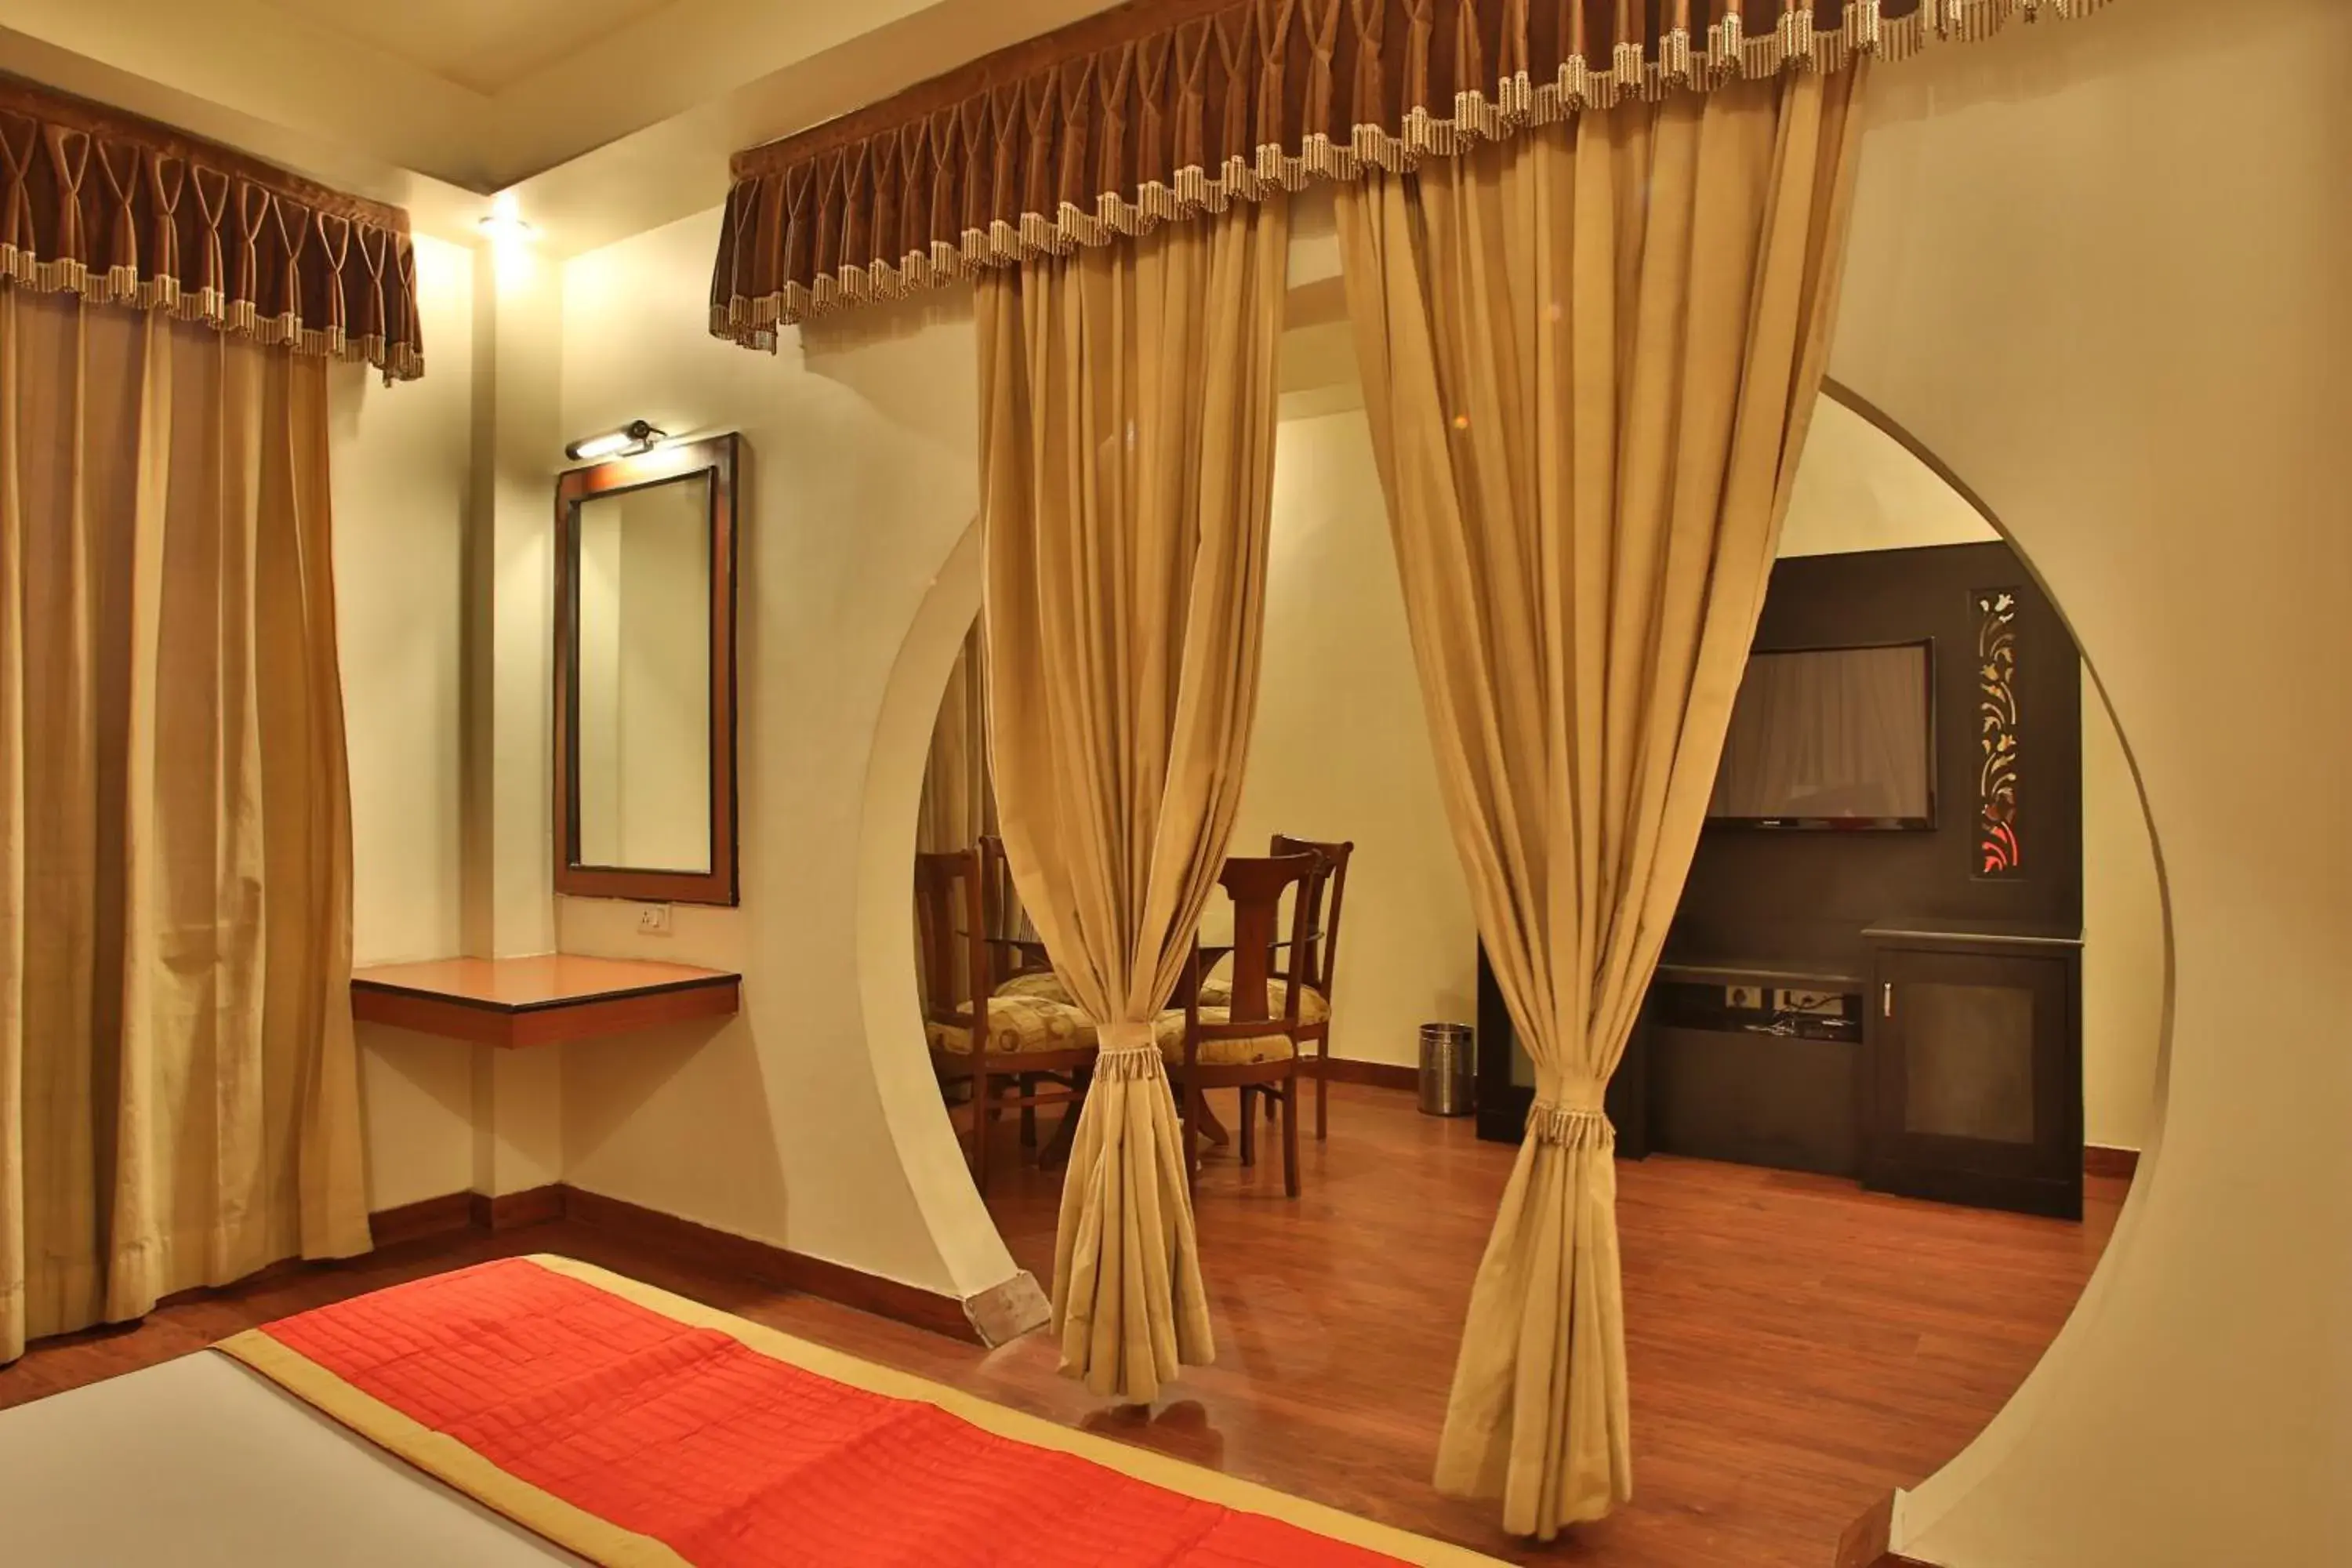 Bed, Room Photo in Hotel The Grand Chandiram